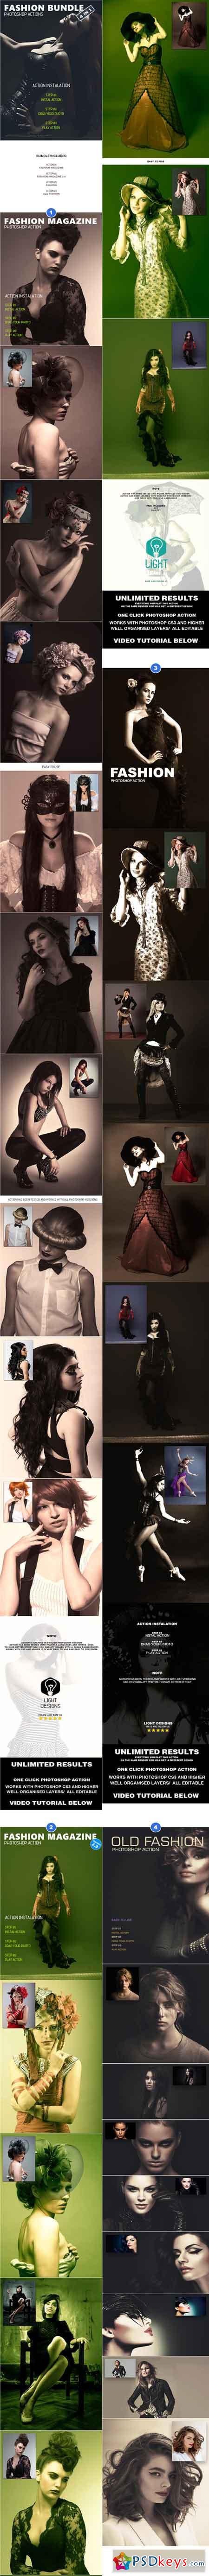 Fashion Bundle - Photoshop Actions #5 19406389